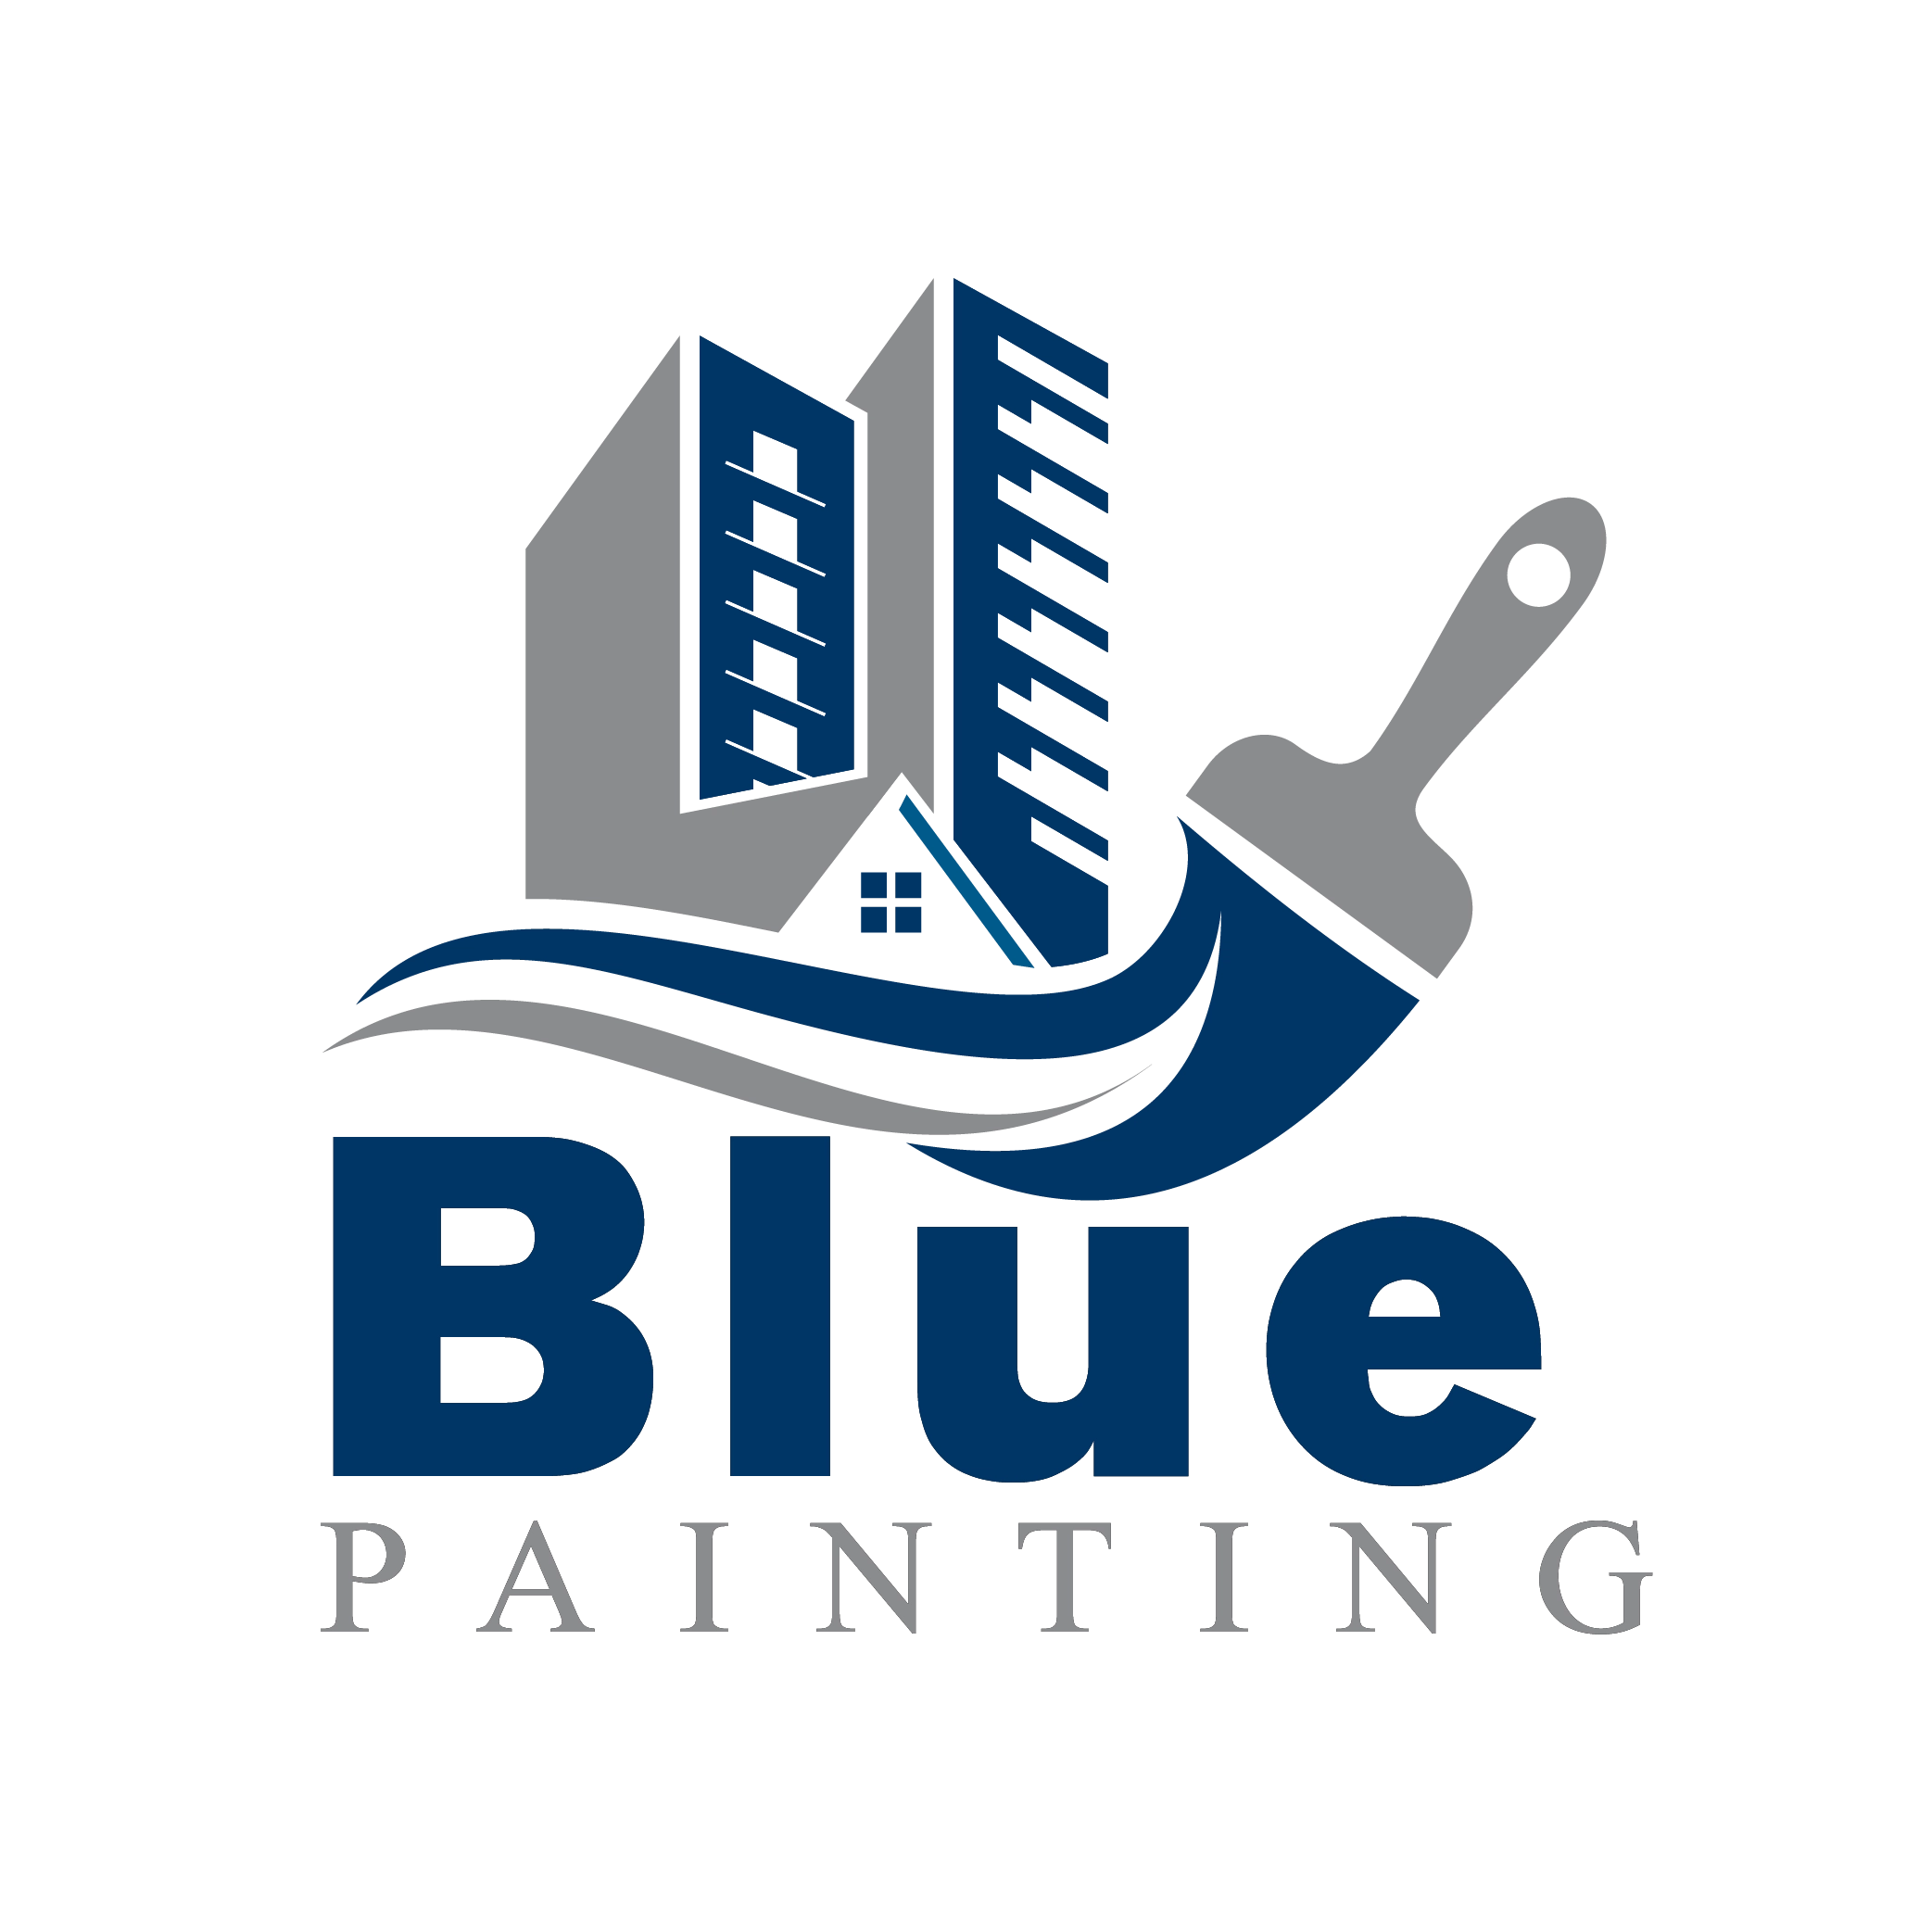 Blue Painting Logo